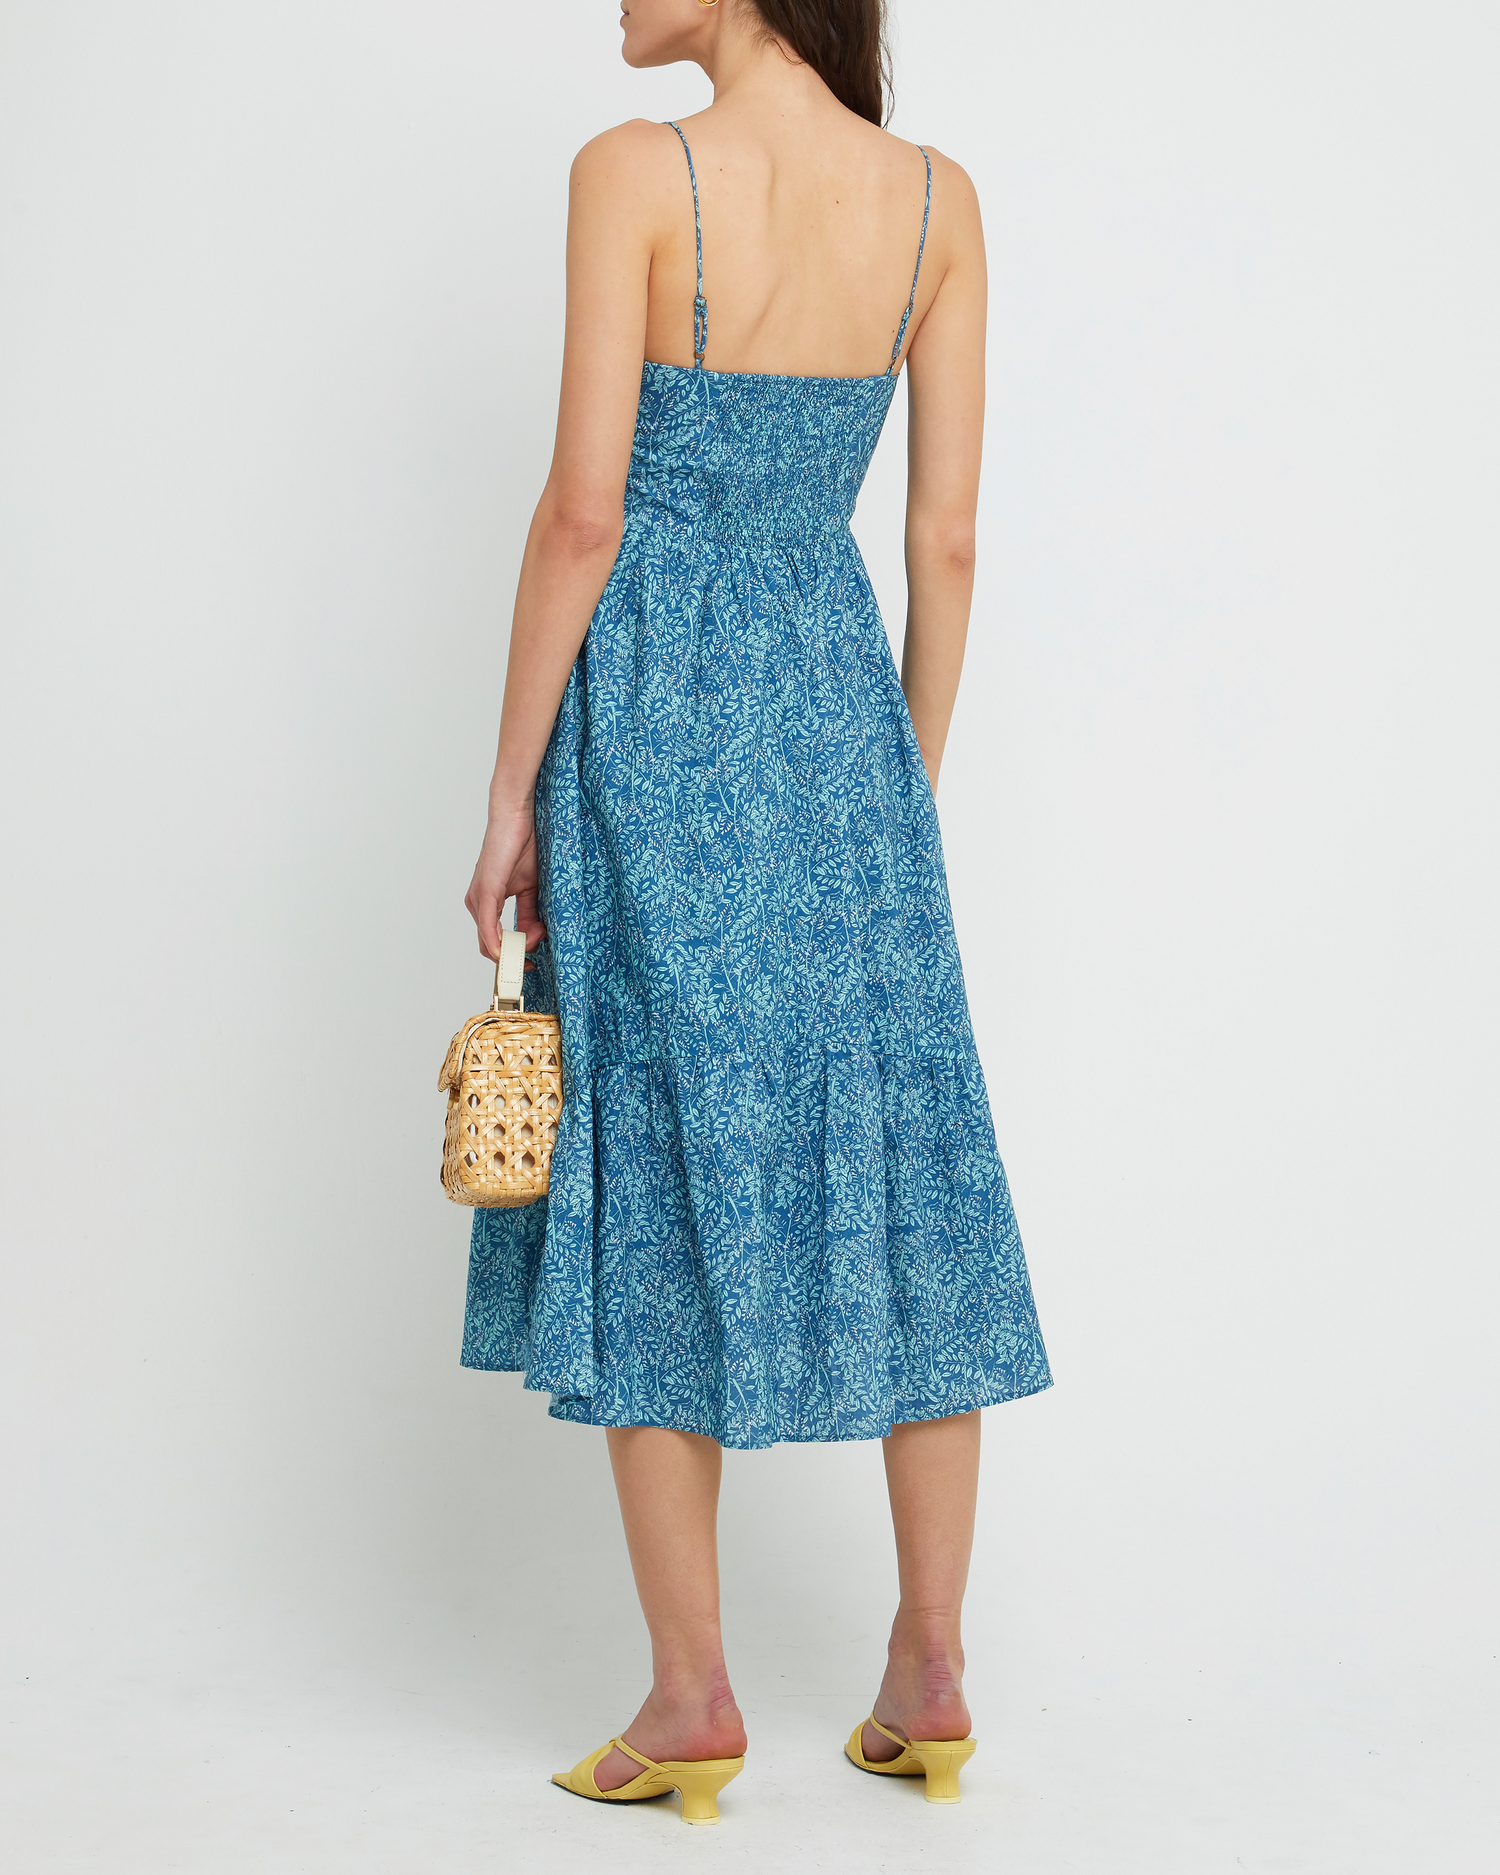 Second image of Momo Dress, a blue midi dress, sweatheart neckline, spaghetti straps, floral